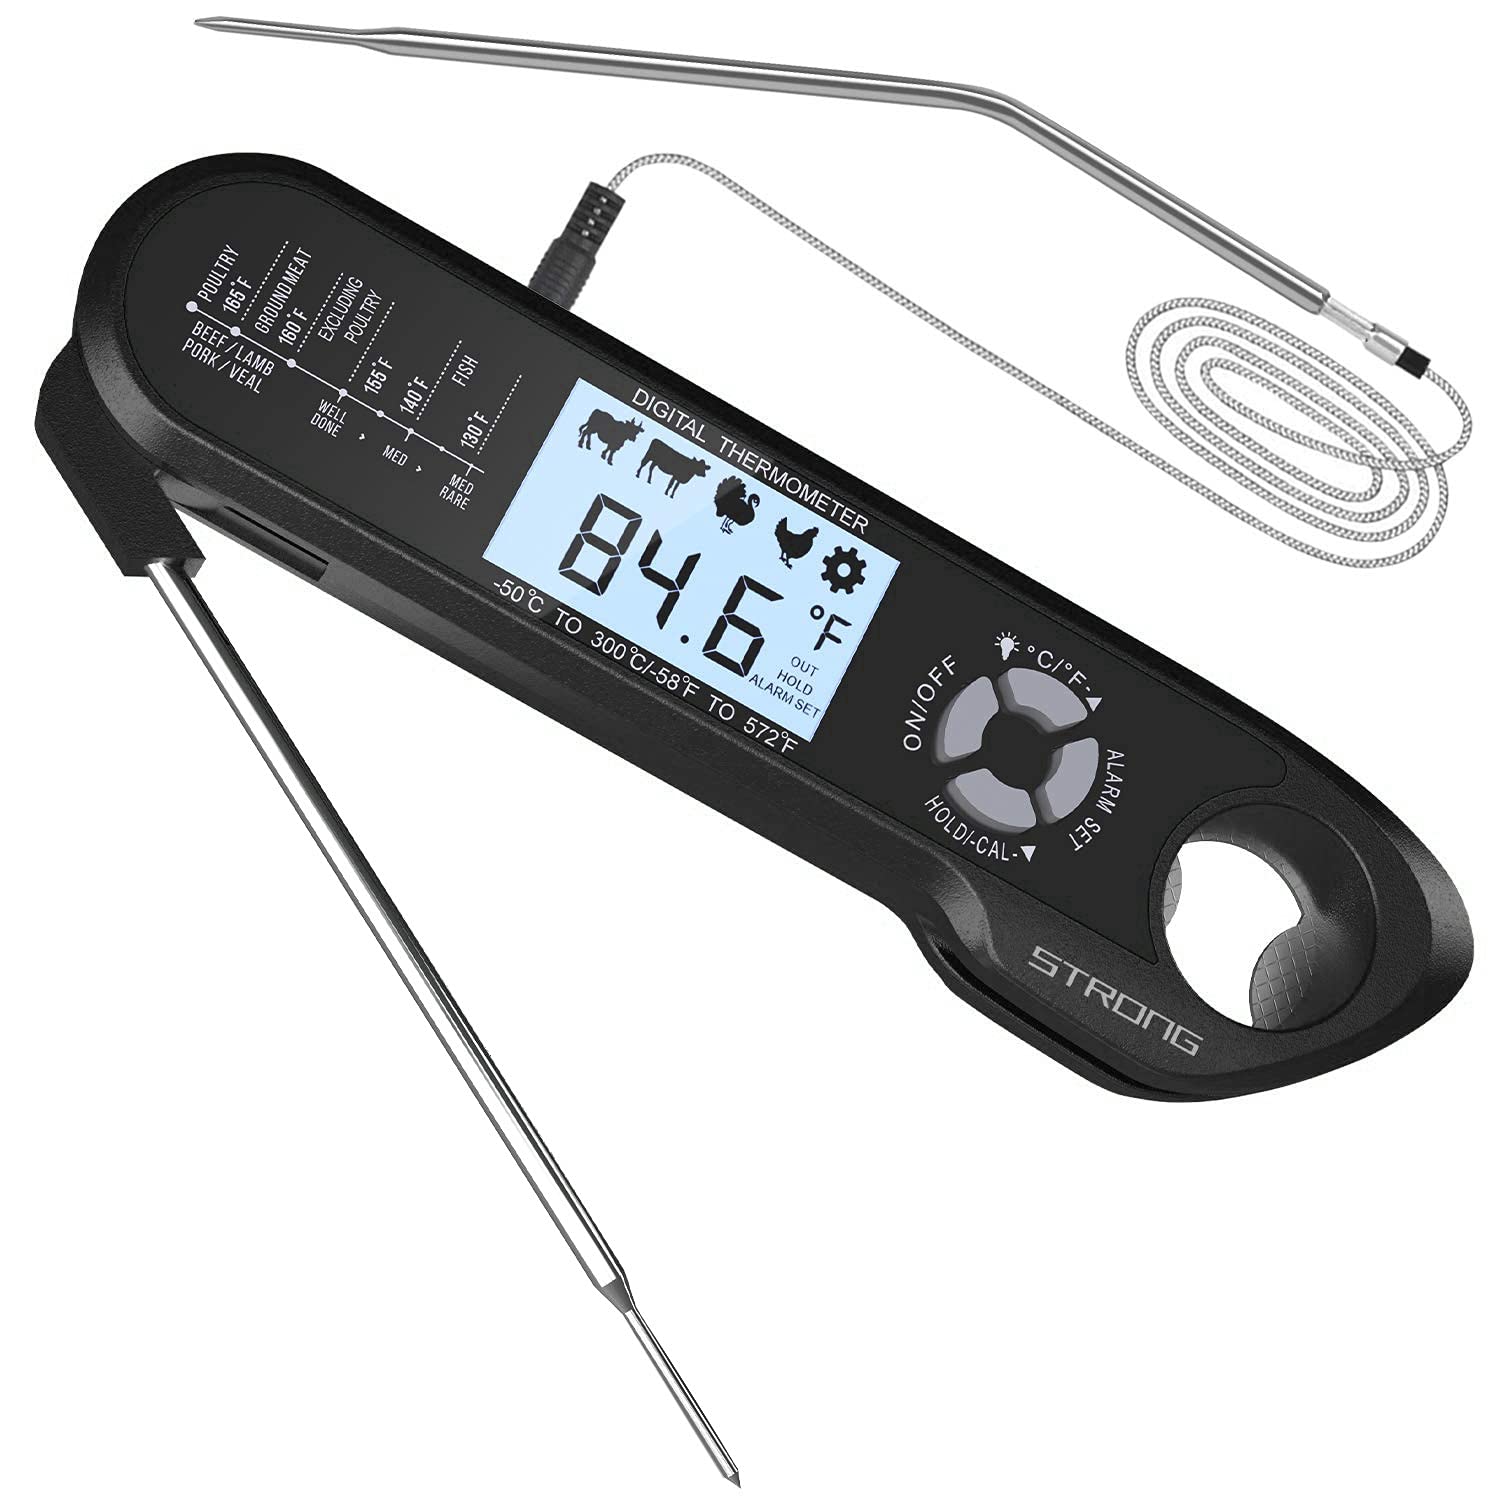 Thermomètre numérique en inox - noir - OXO - alinea